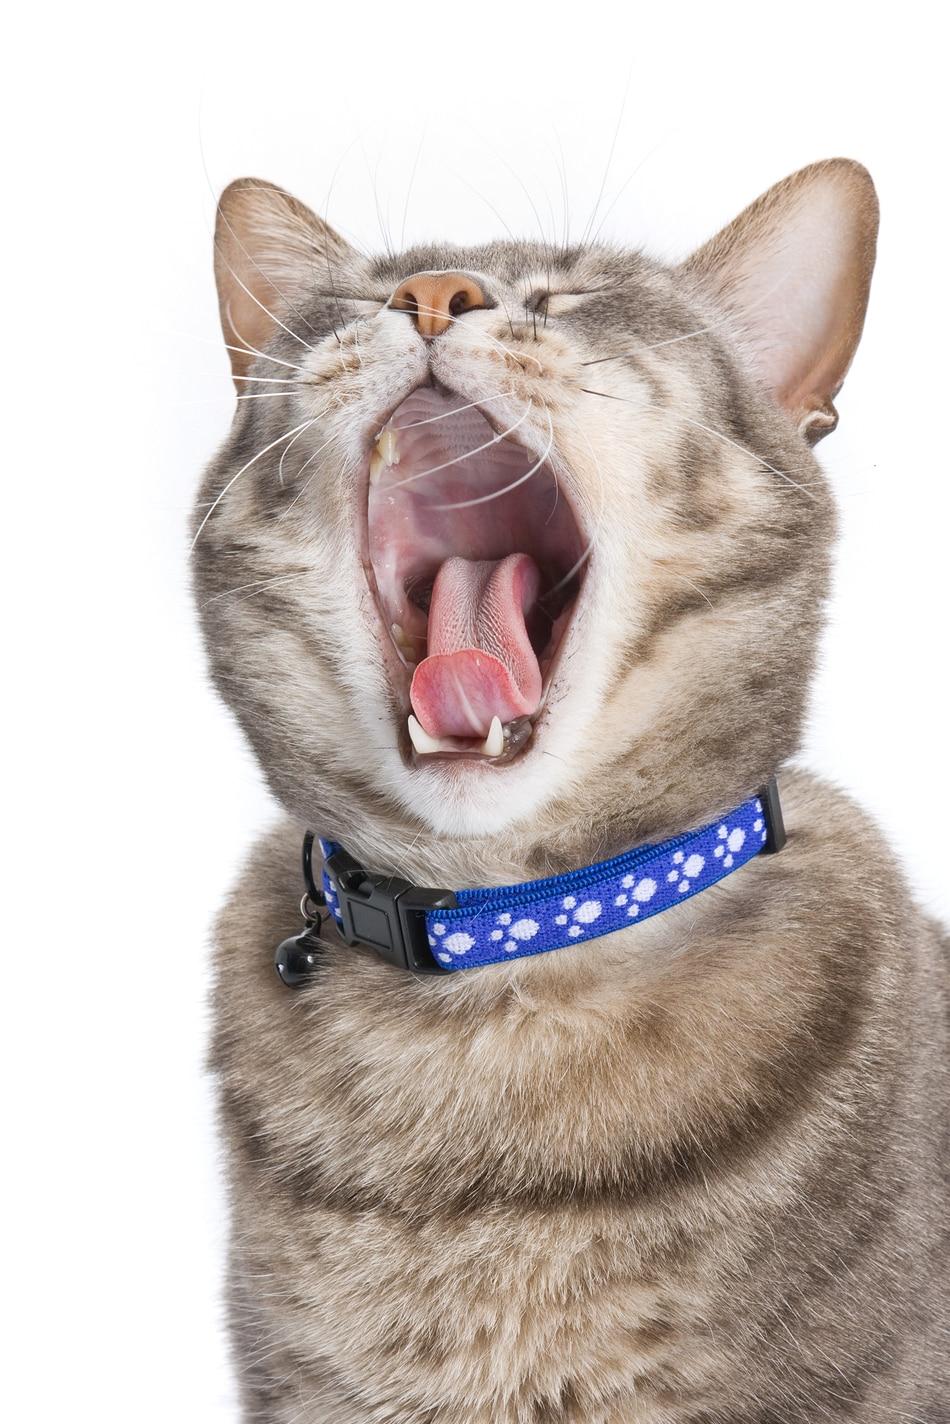 Cat in blue collar yawning.